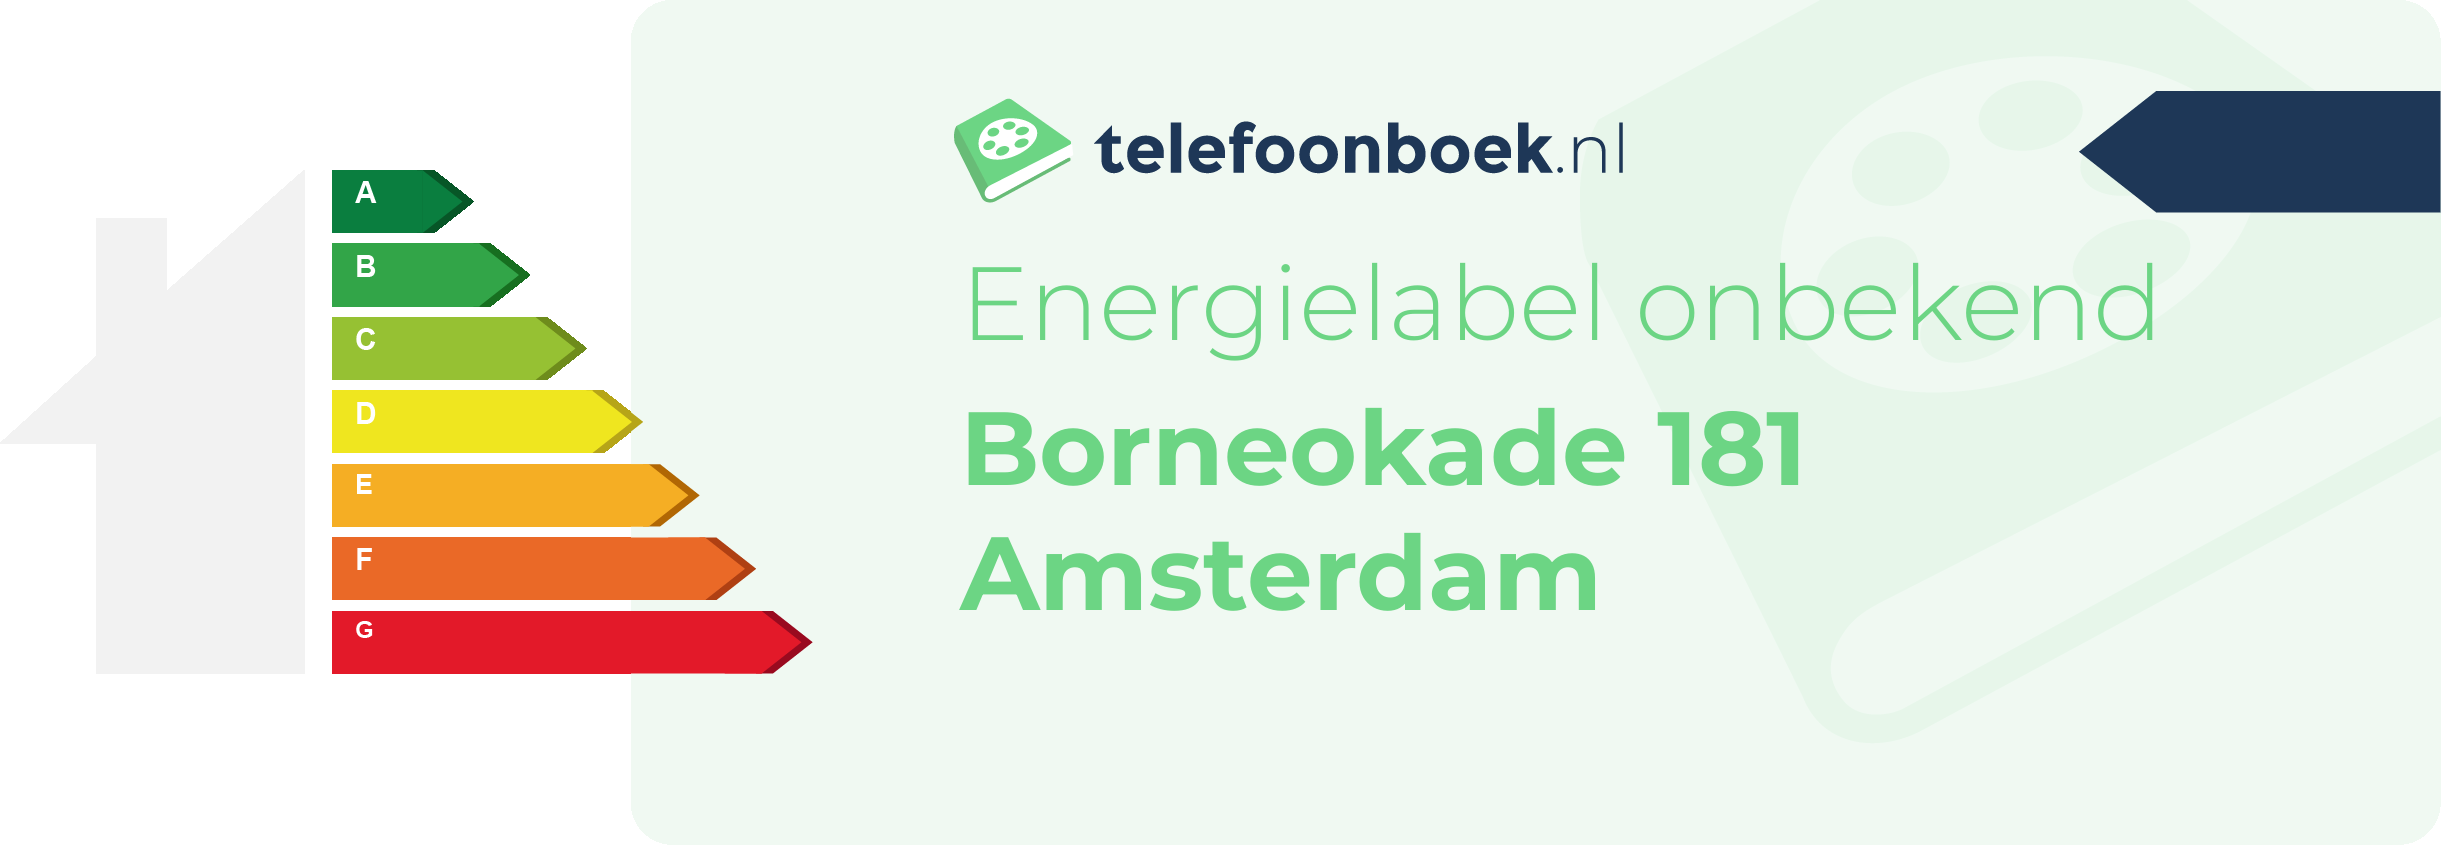 Energielabel Borneokade 181 Amsterdam